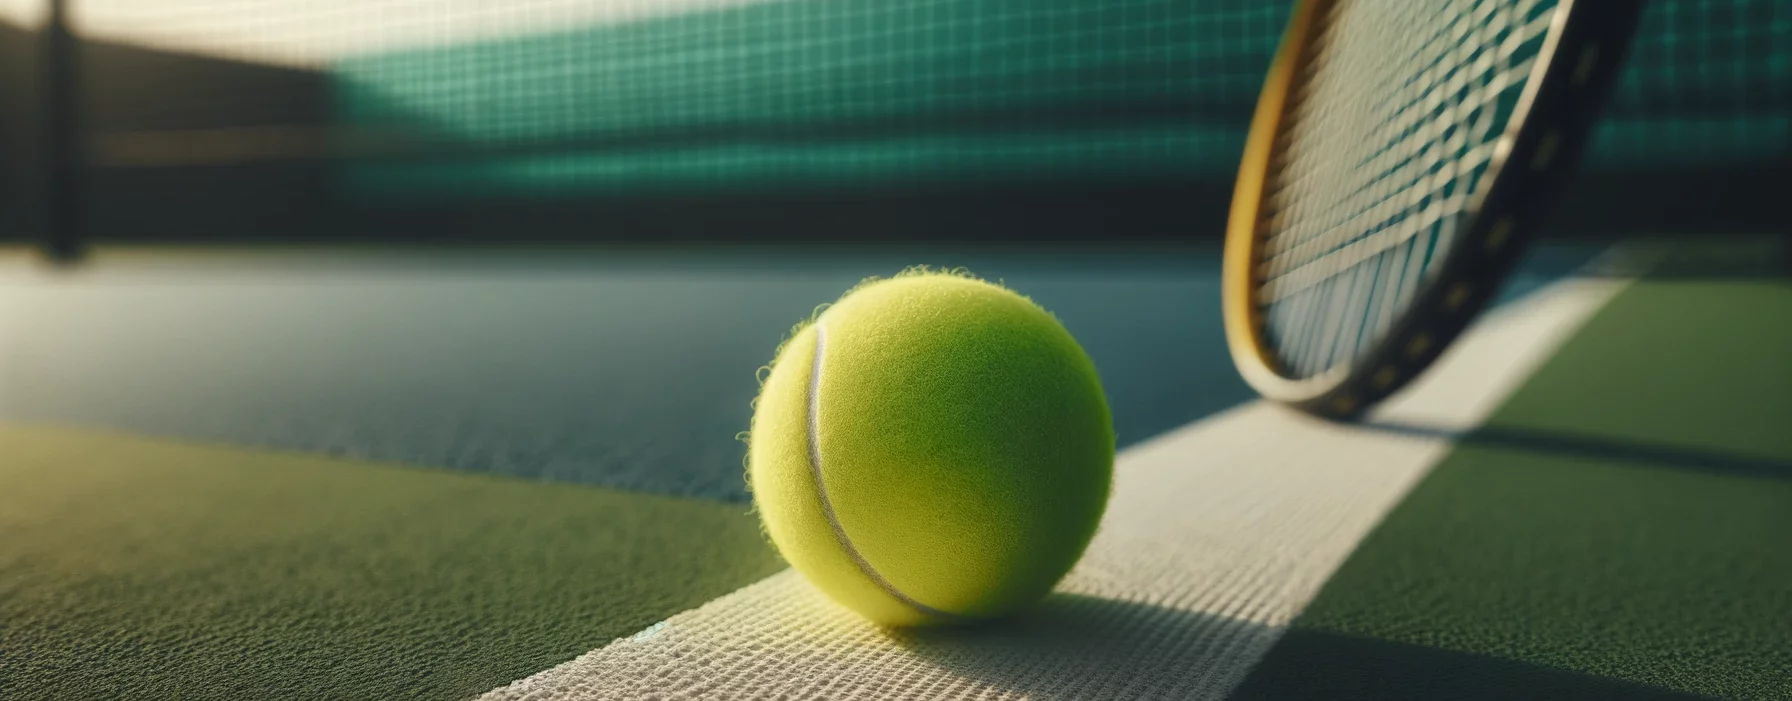 Leuchtend gelber Tennisball